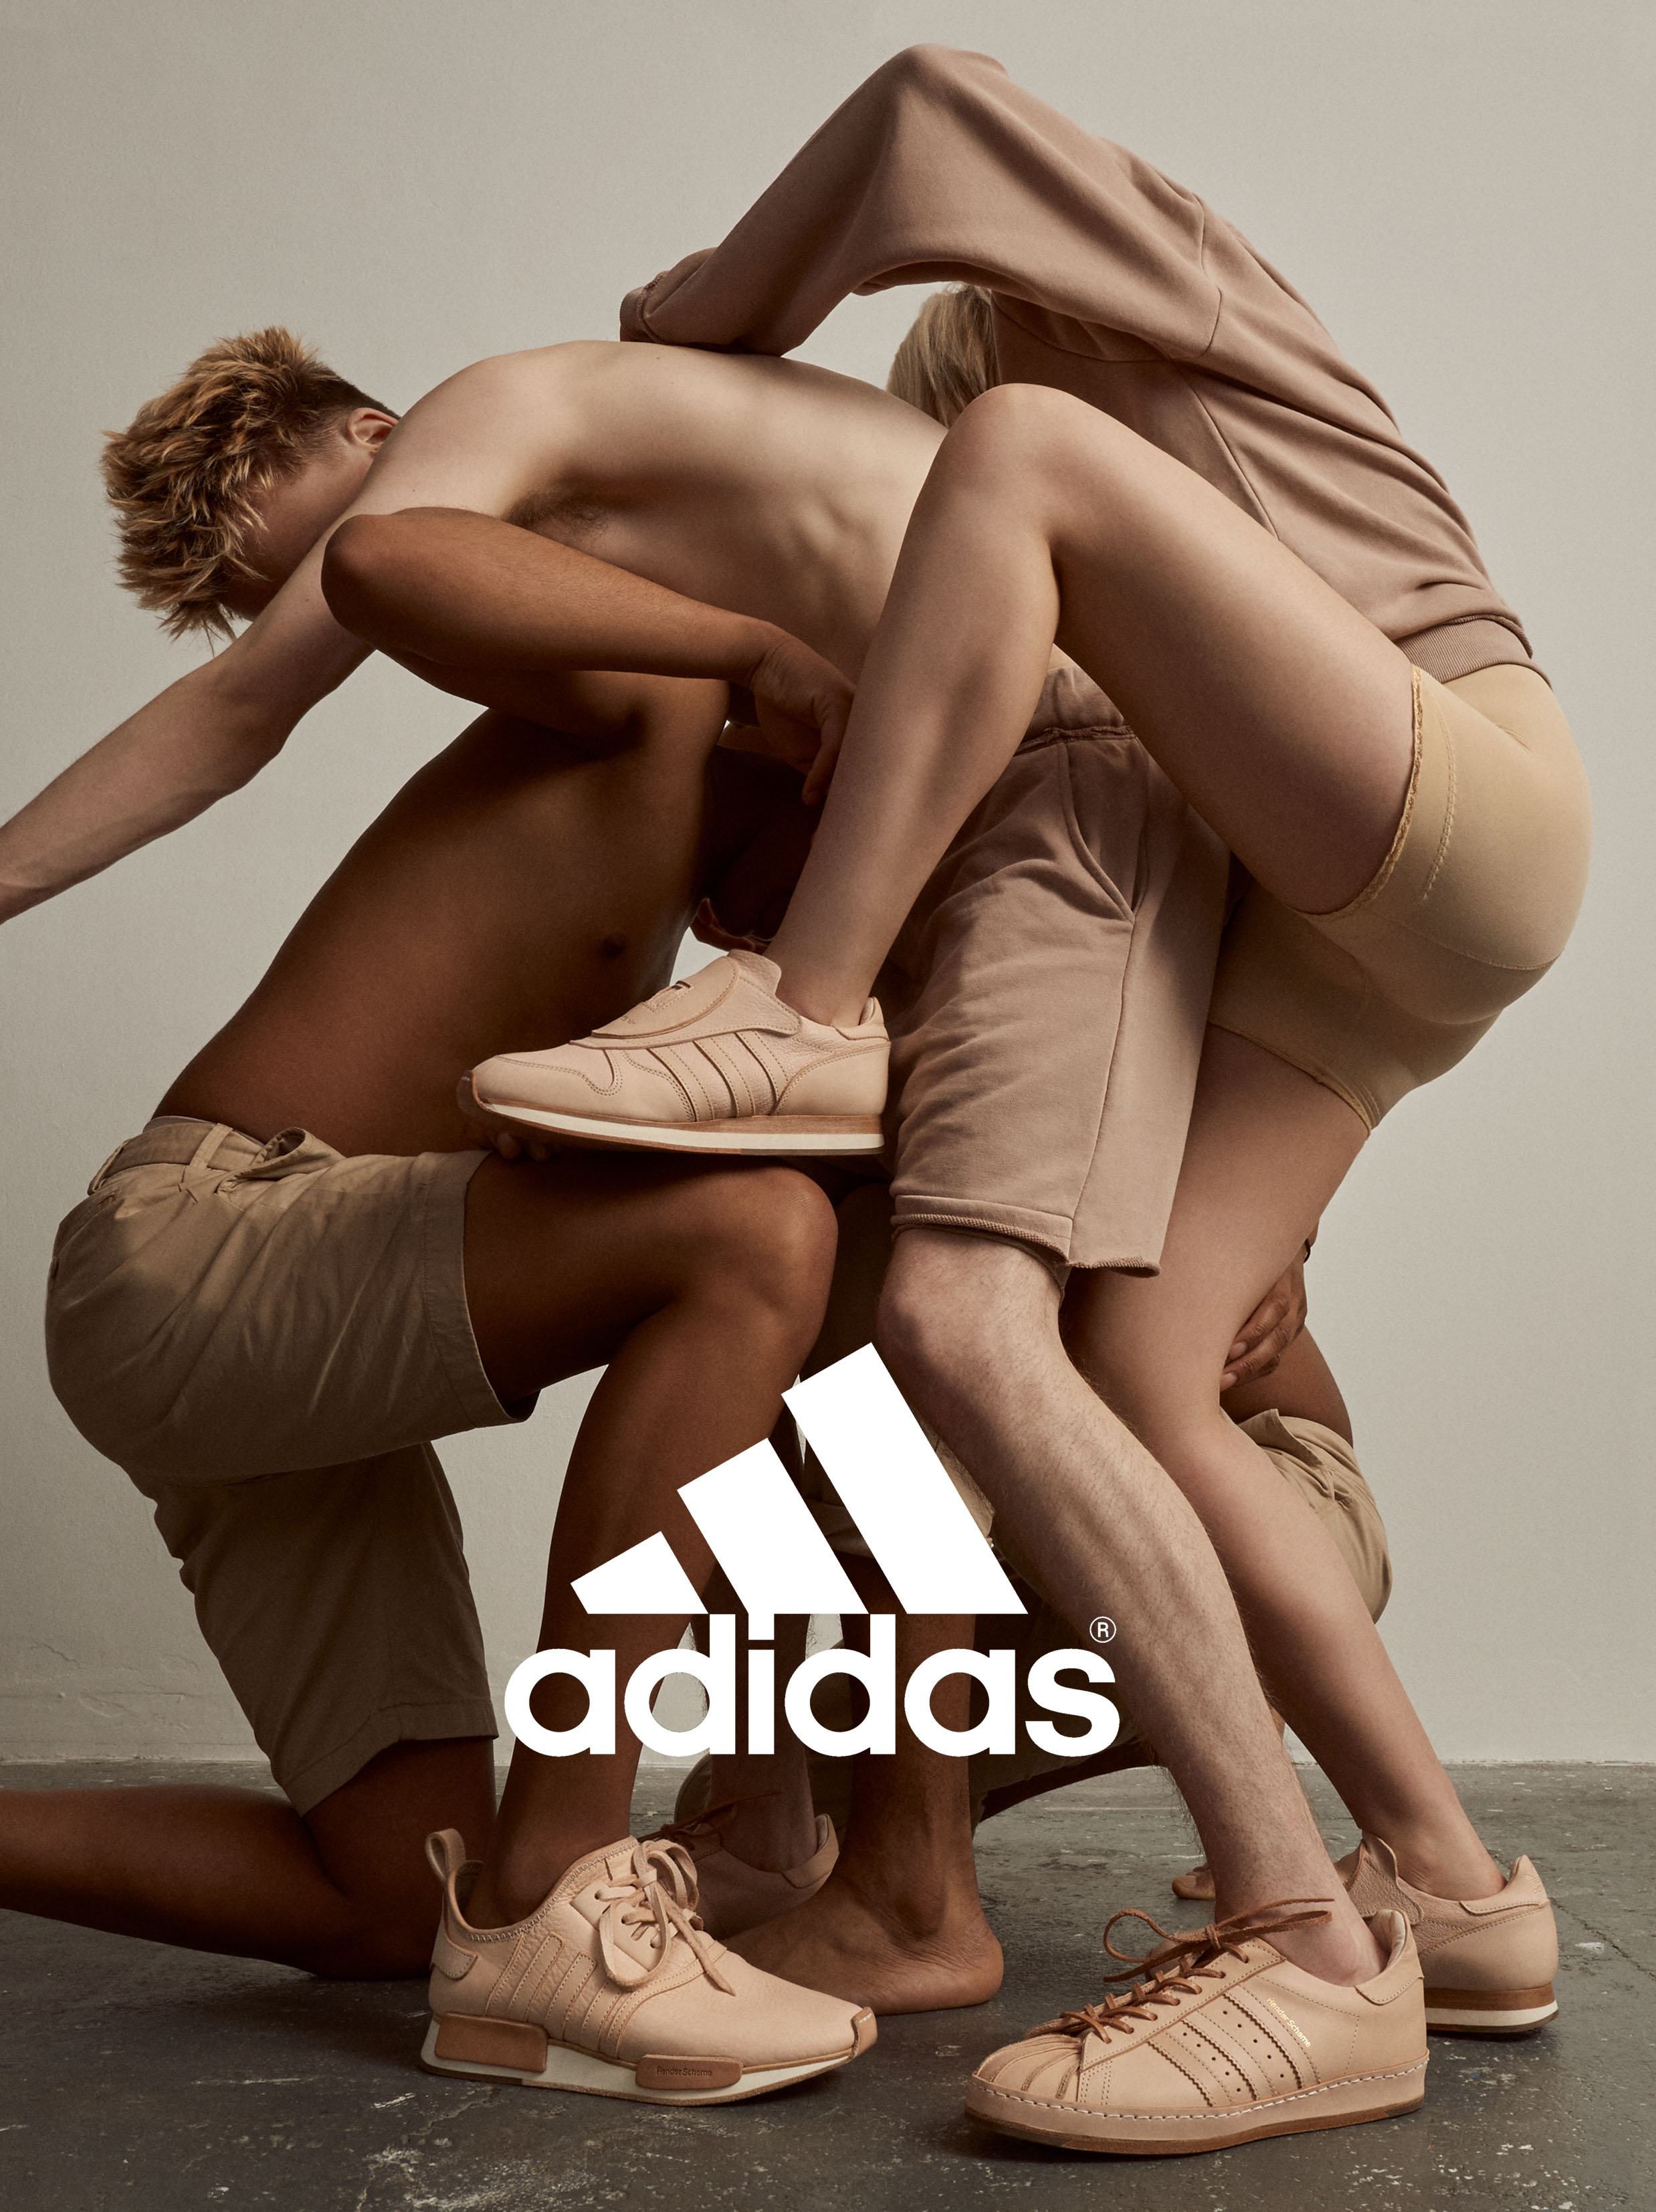 Adidas Originals x Hender Scheme F/W 2017 | Alessio Bolzoni | Adidas | T Magazine | Tuomas Laitinen | Numerique Retouch Photo Retouching Studio